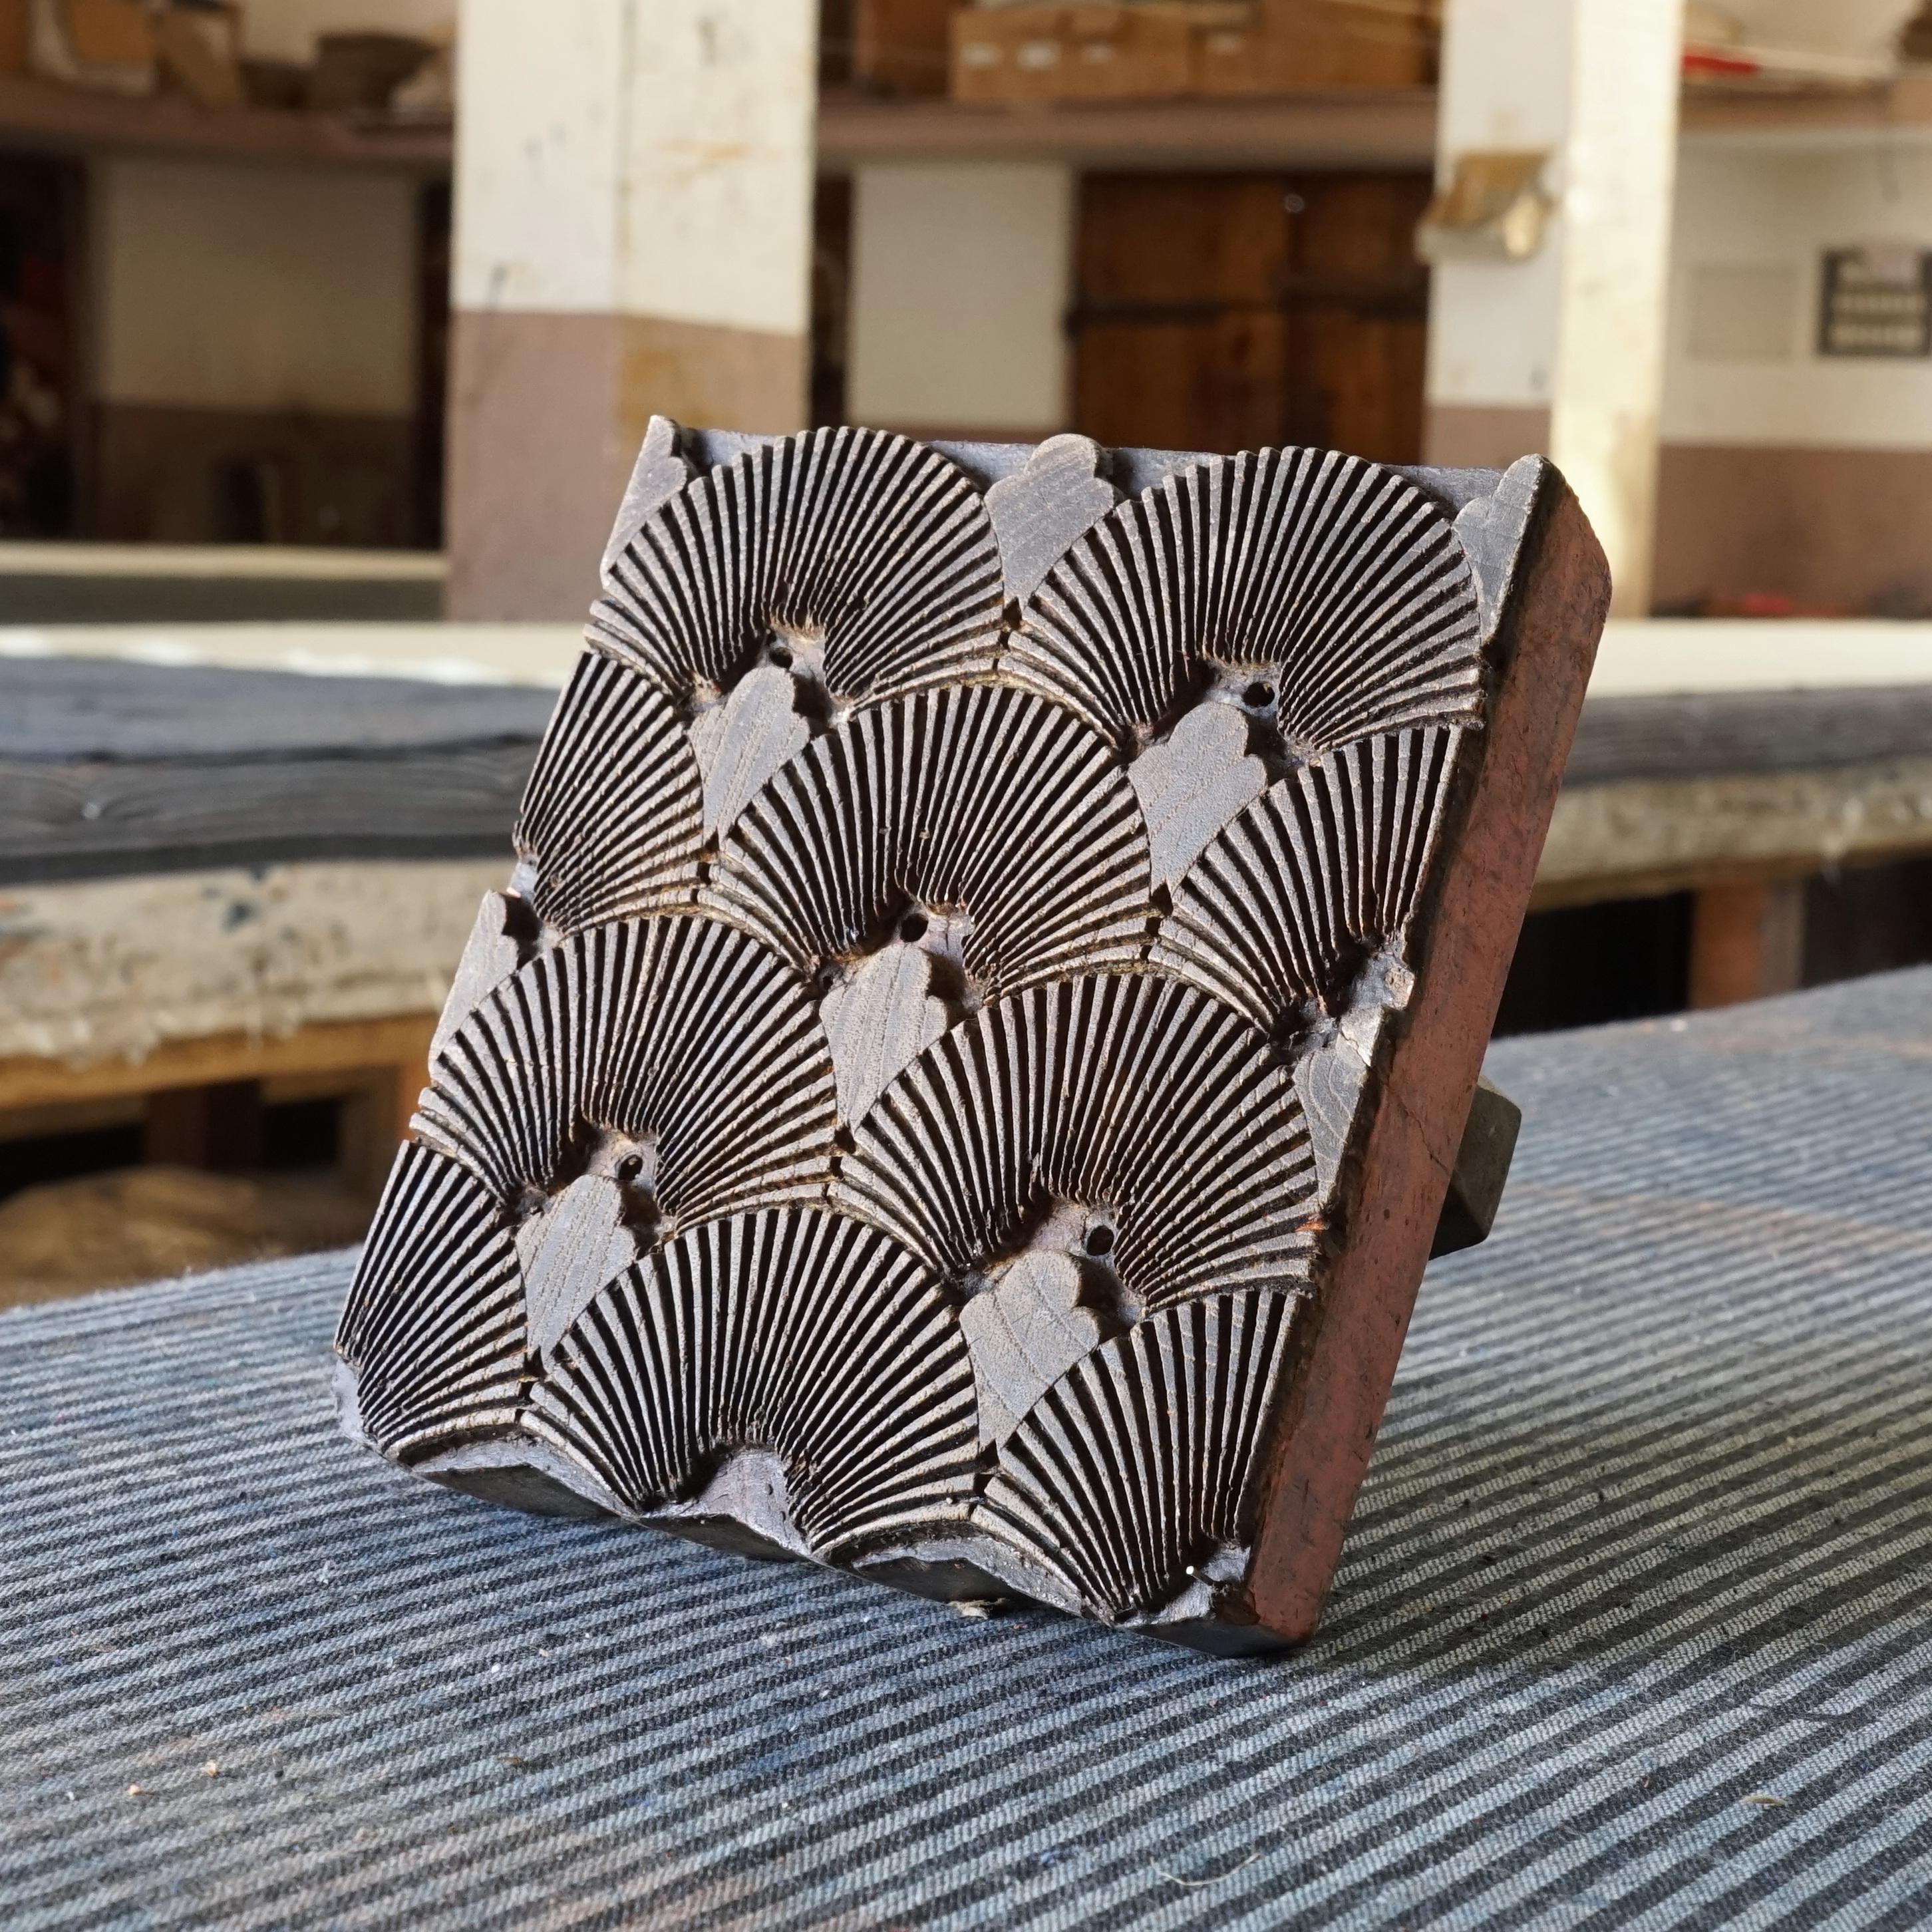 SIK17 - Indian Woodblock-Printed Cotton Fabric - Shell Design - Myrobalan Dye - Block